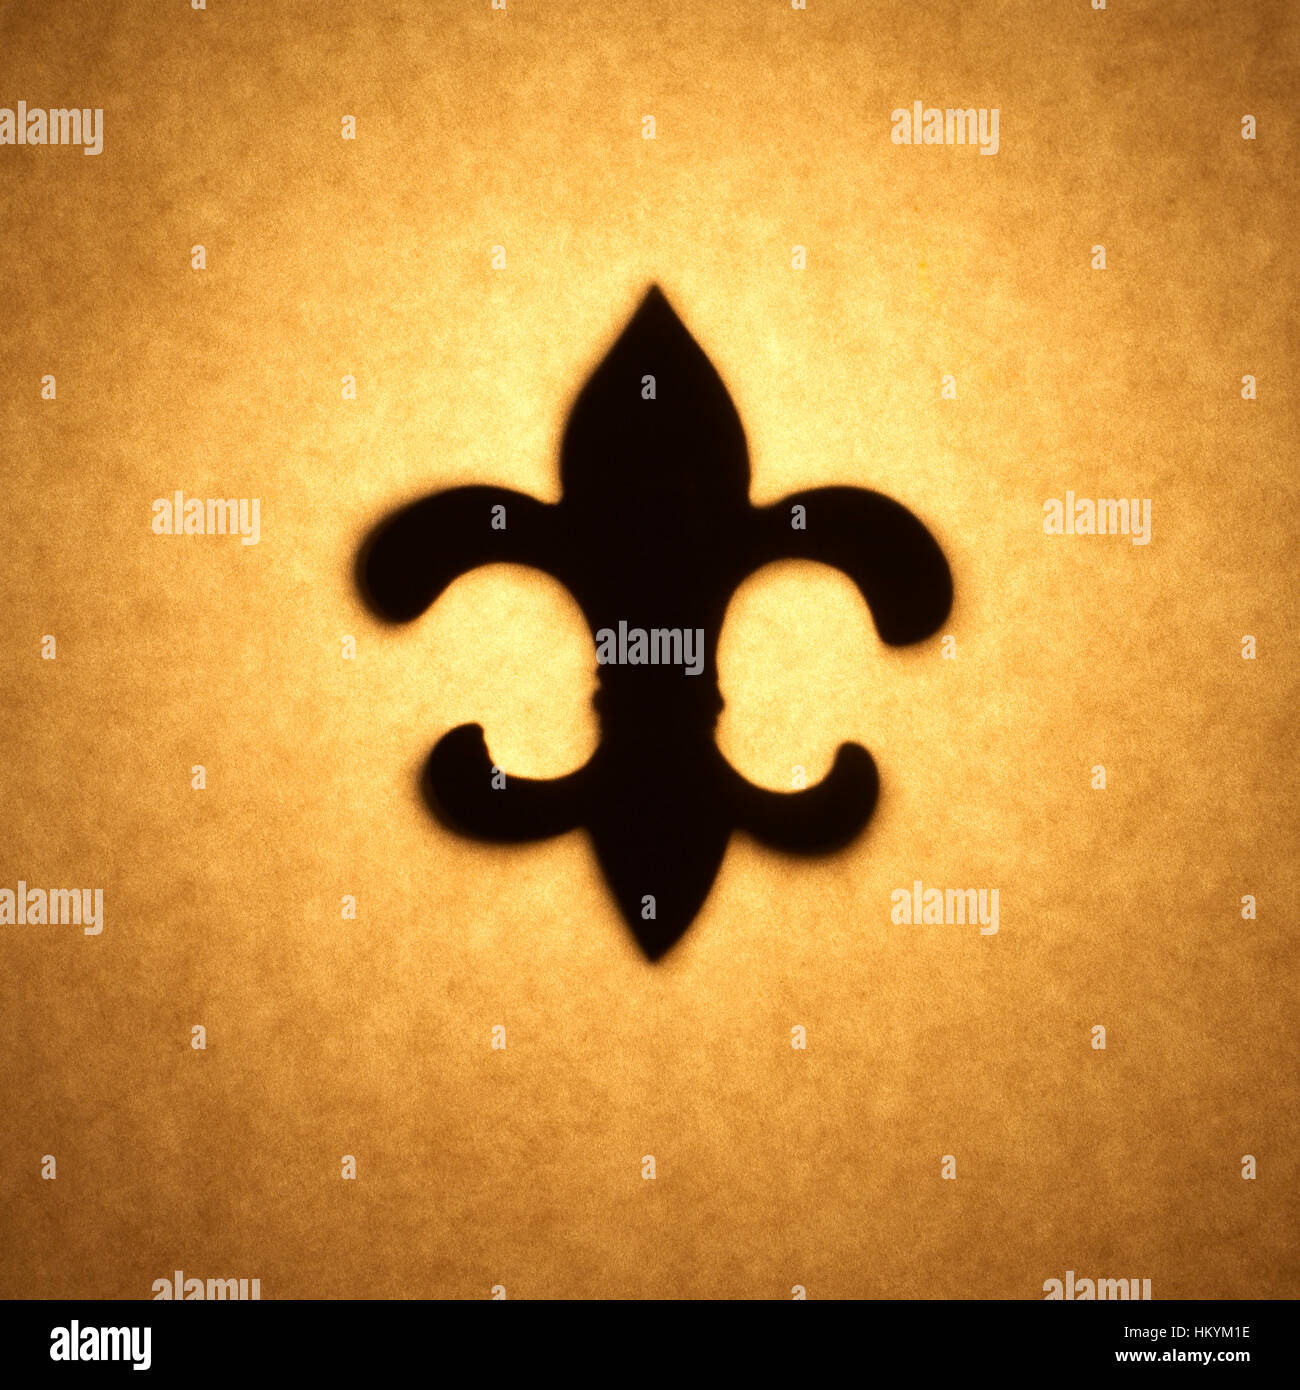 Backlit silhouette of fleur-de-lis shape cut out against brown tone paper, with spot highlight. Stock Photo